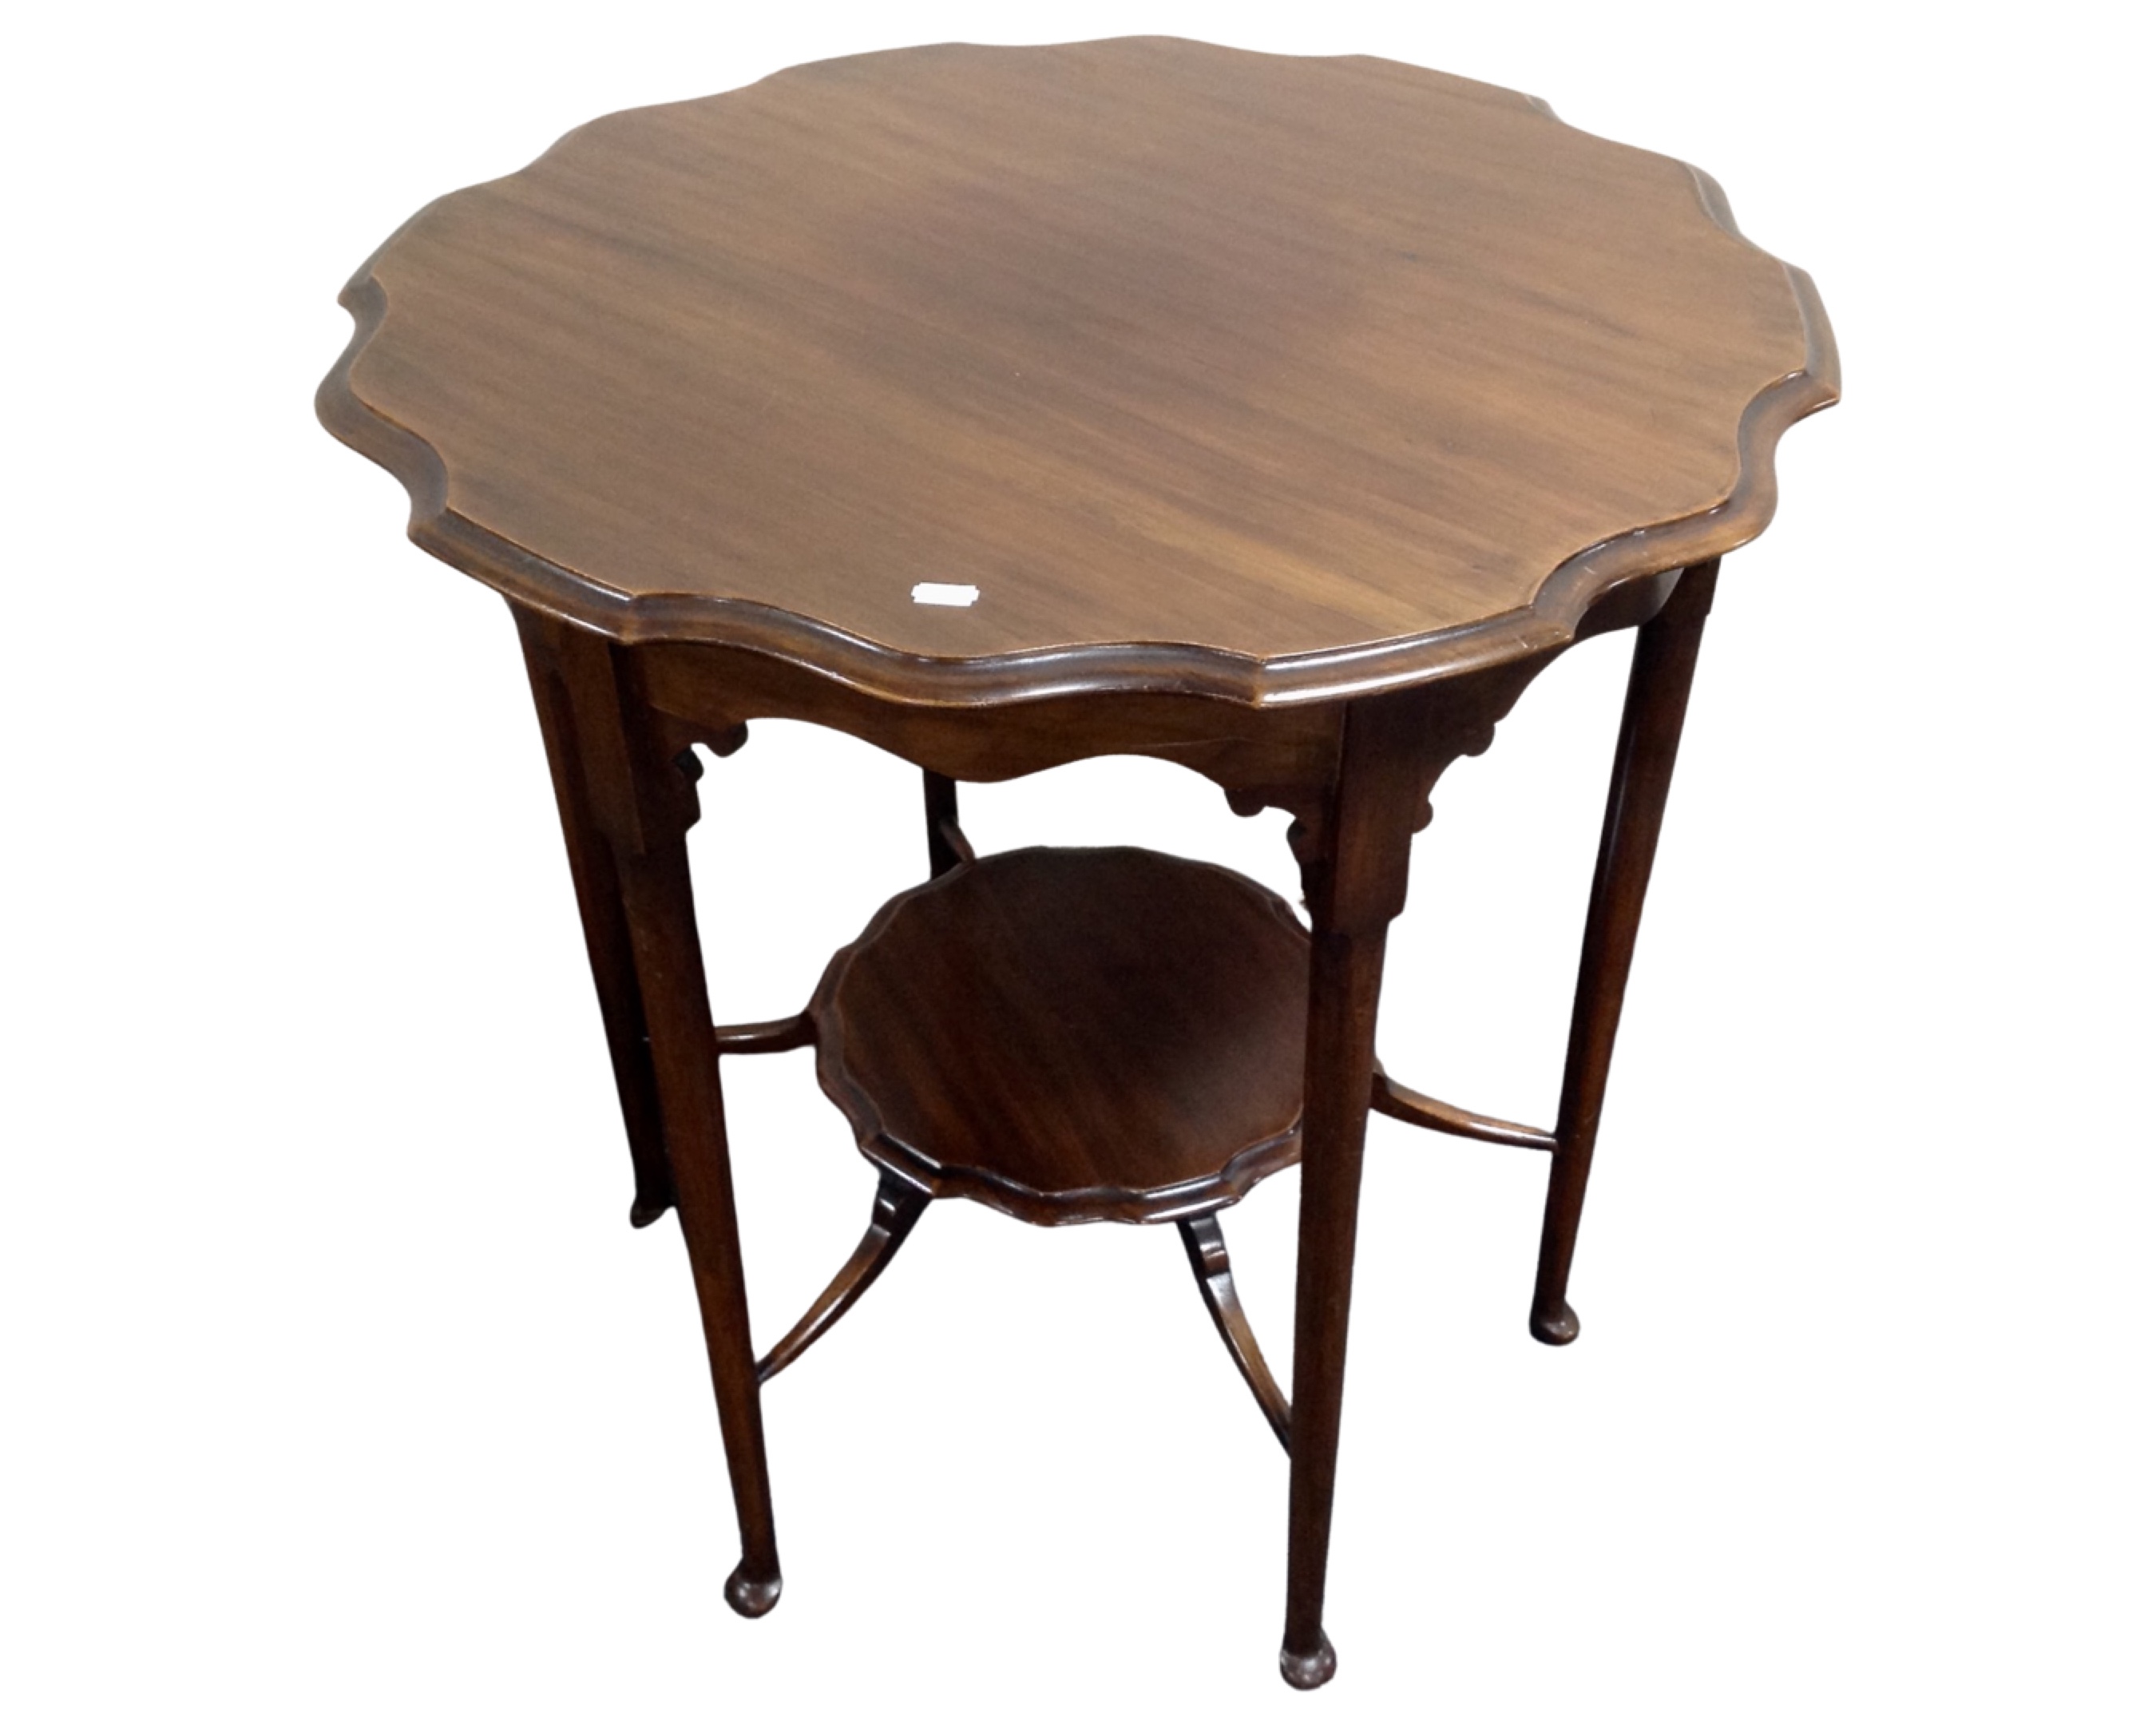 An Edwardian mahogany shaped occasional table.